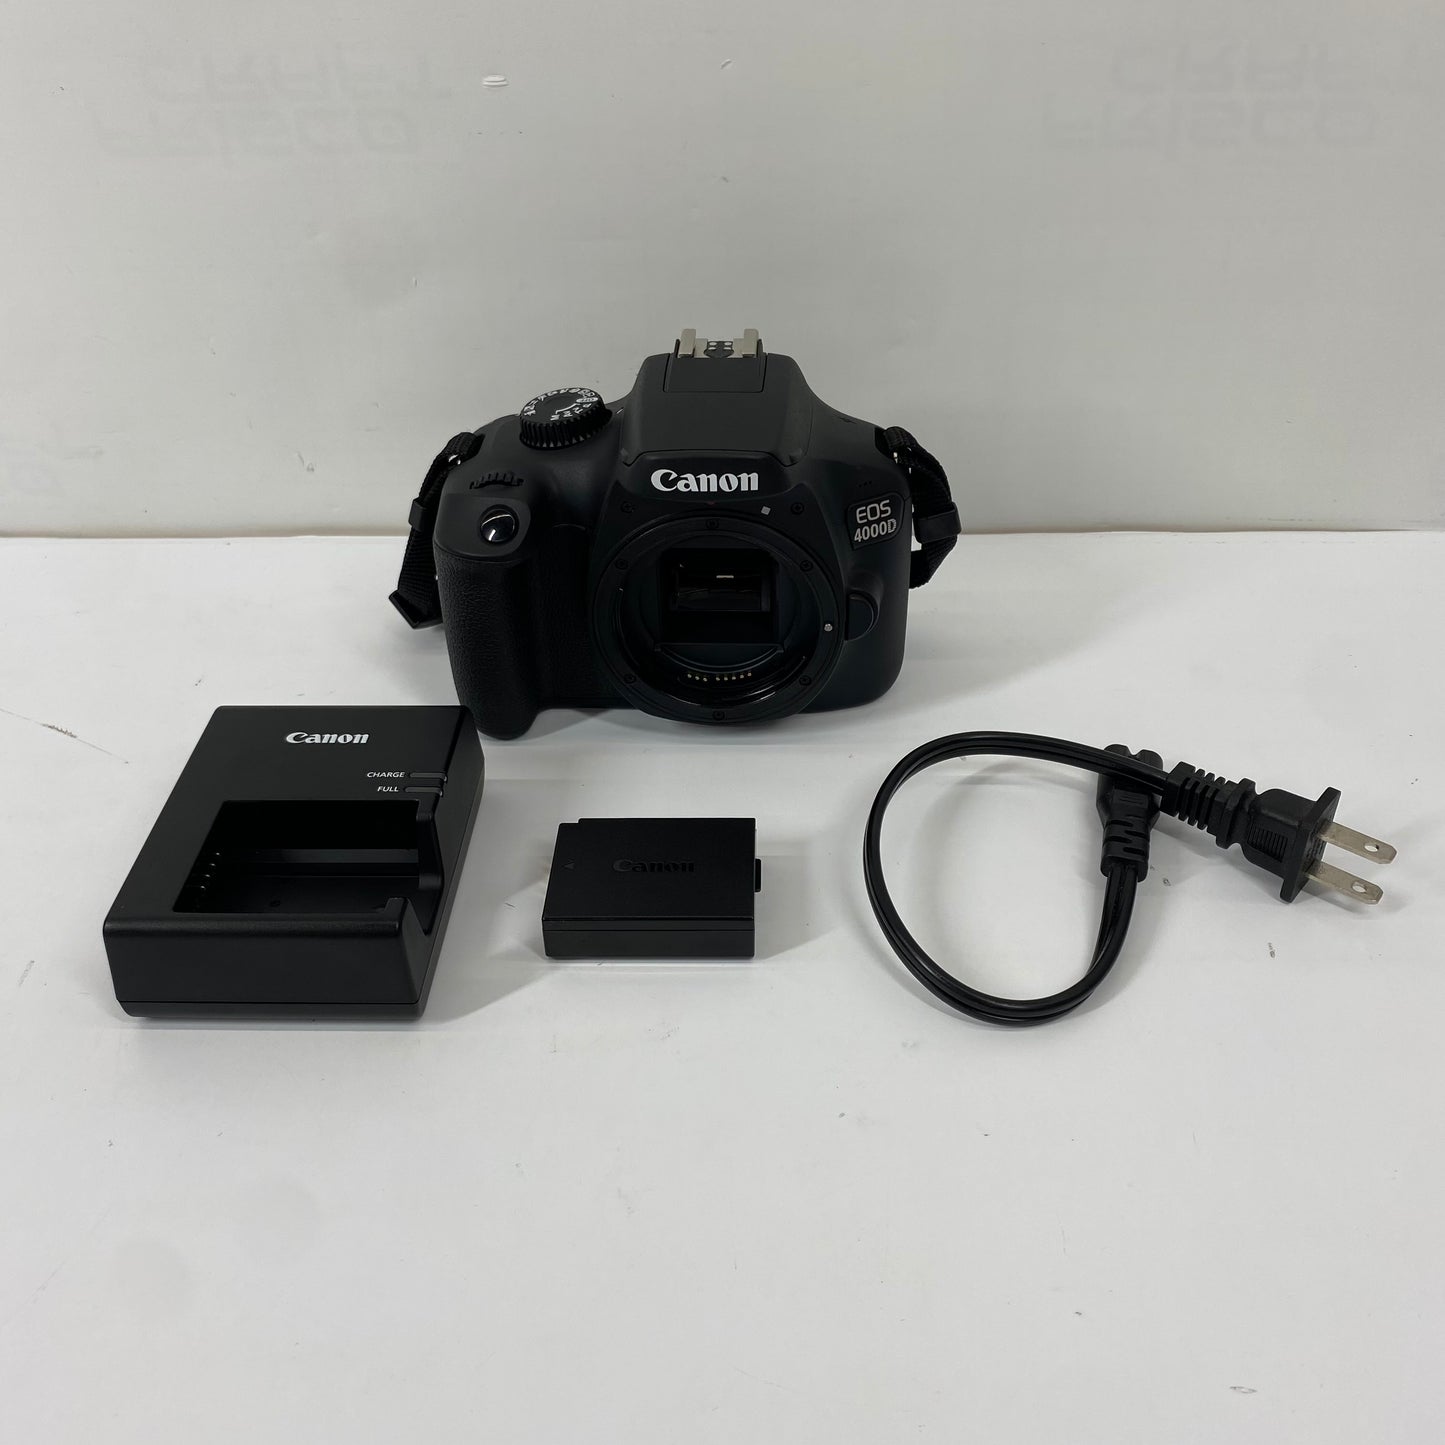 Canon EOS 4000D 18.0MP Digital SLR DSLR Camera Body Only